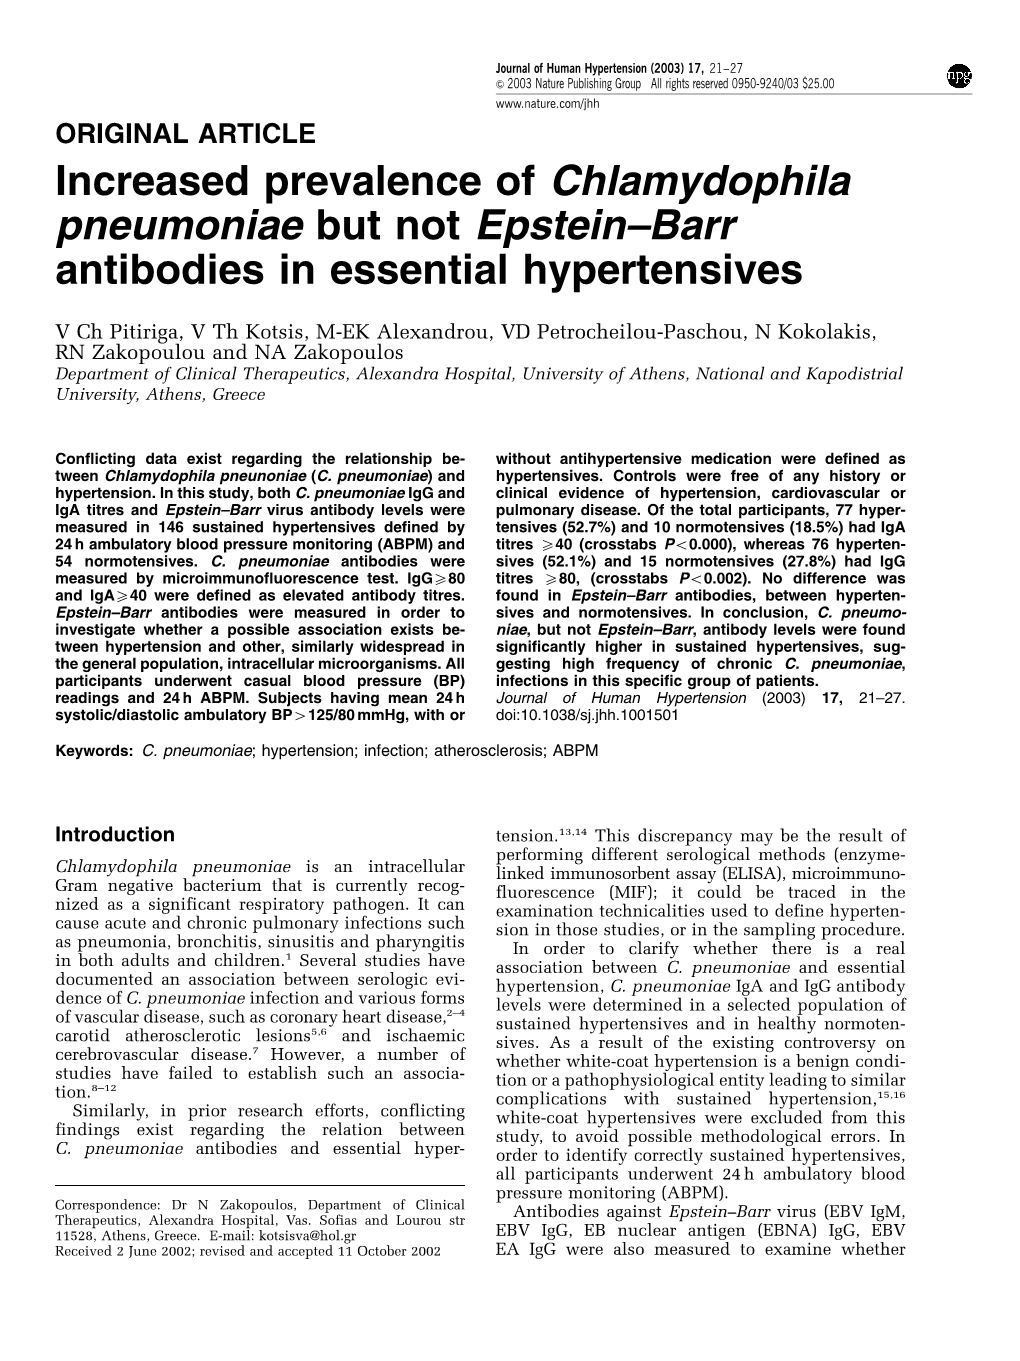 Increased Prevalence of Chlamydophila Pneumoniae but Not Epstein–Barr Antibodies in Essential Hypertensives